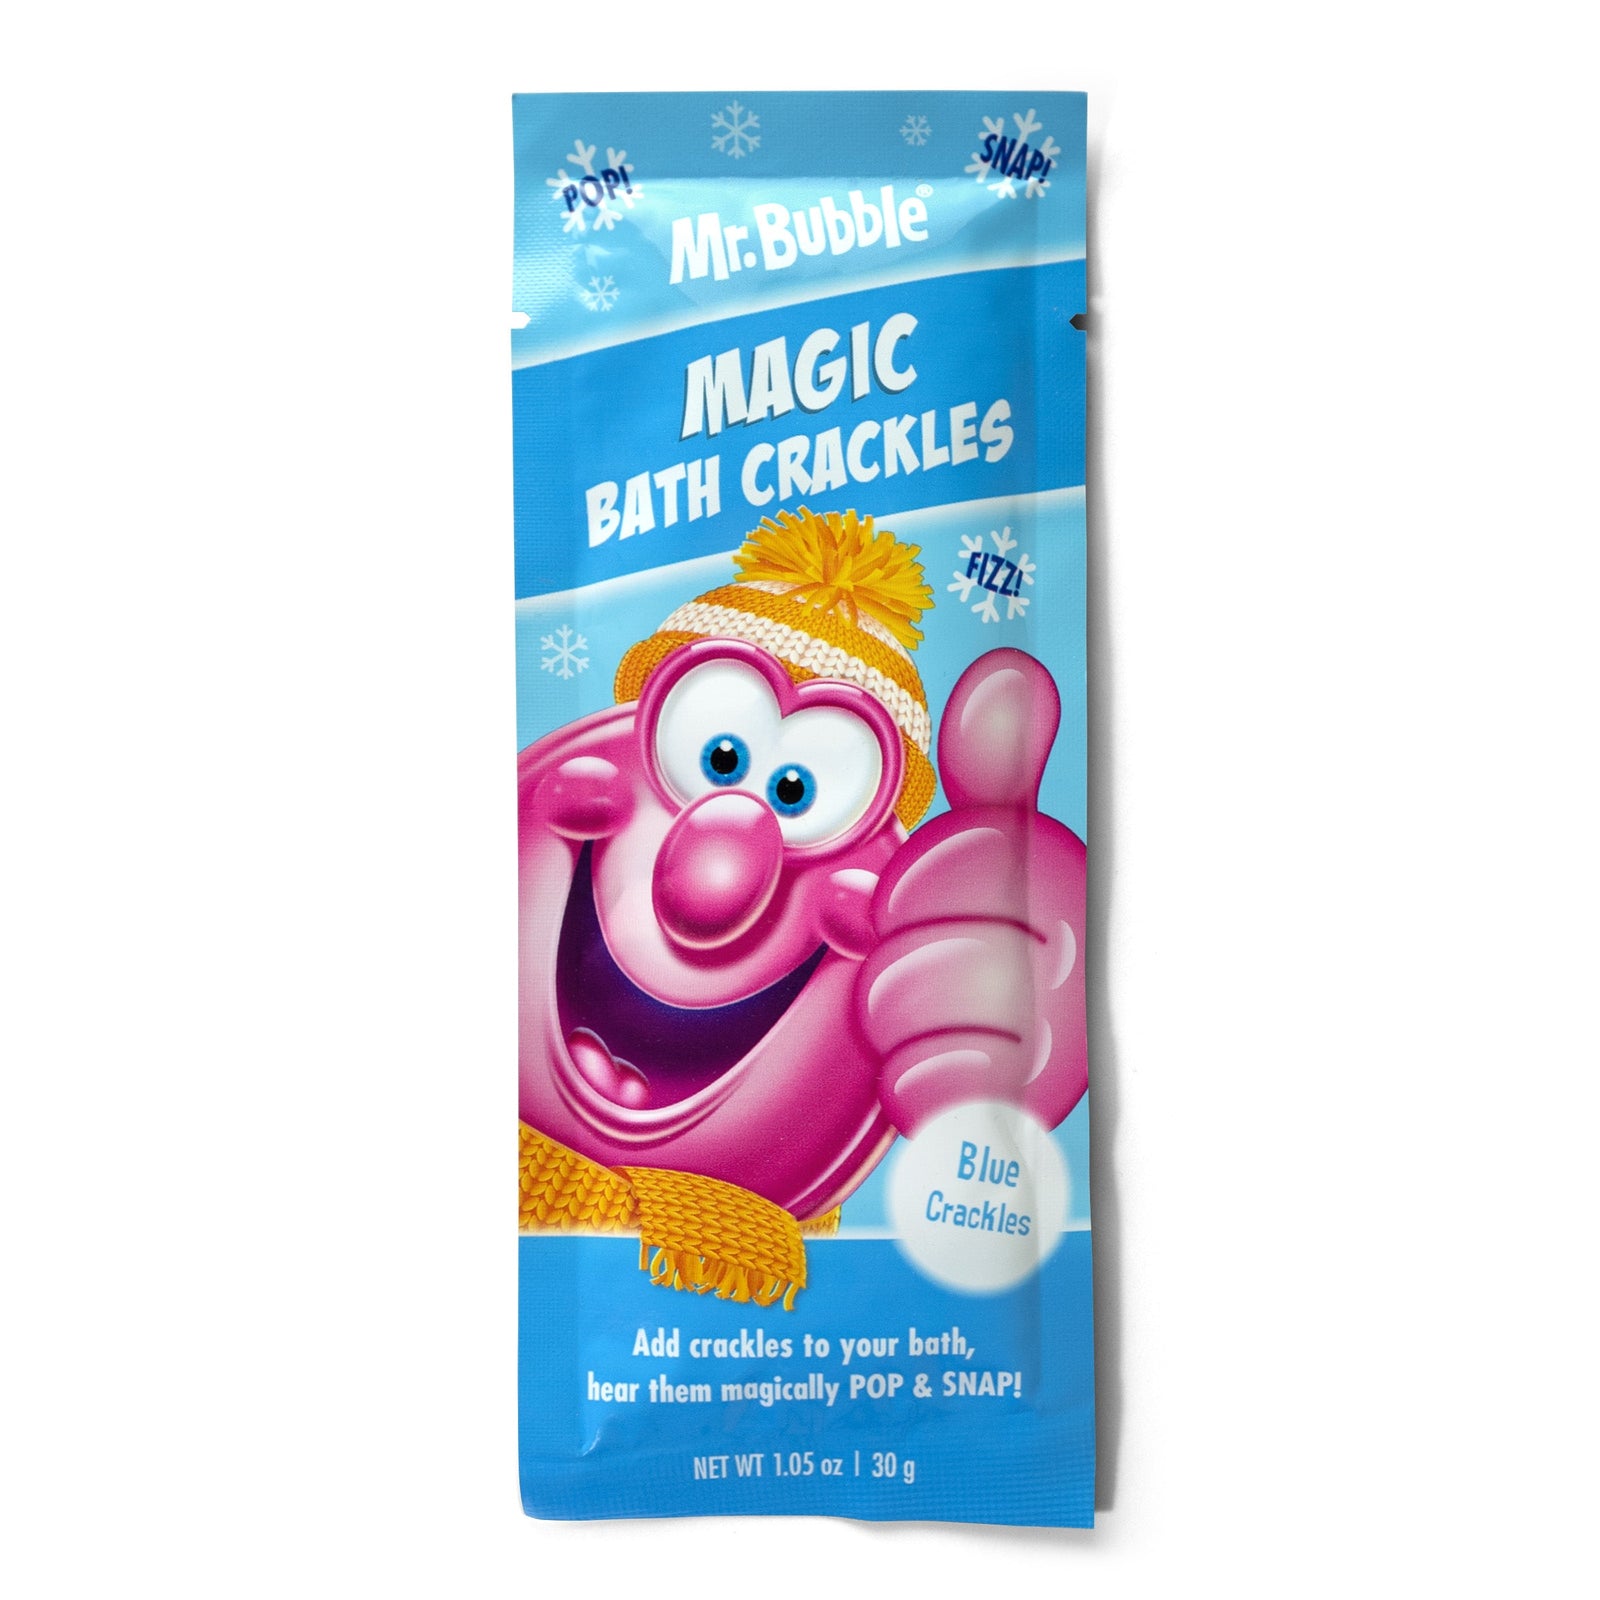 Holiday Edition Magic Bath Crackles